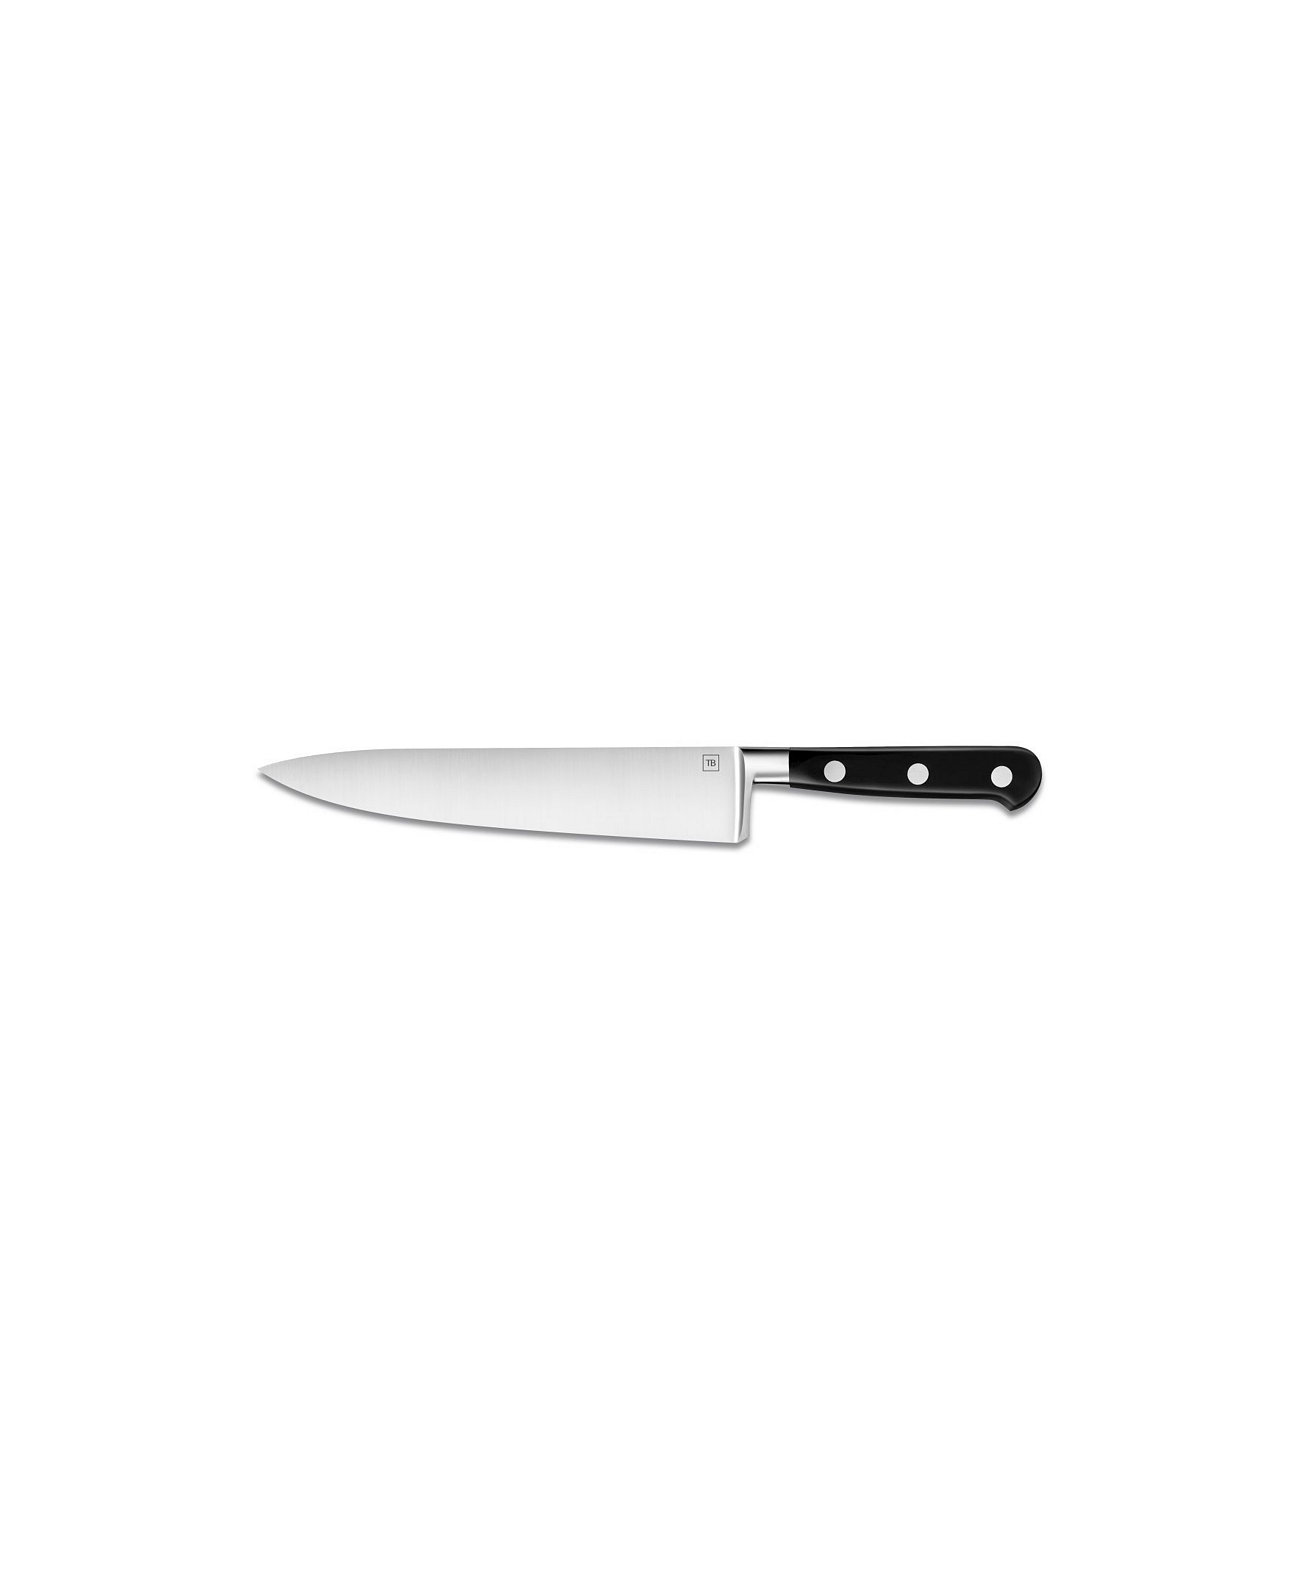 Поварской нож Maestro Ideal 8 дюймов TB Groupe